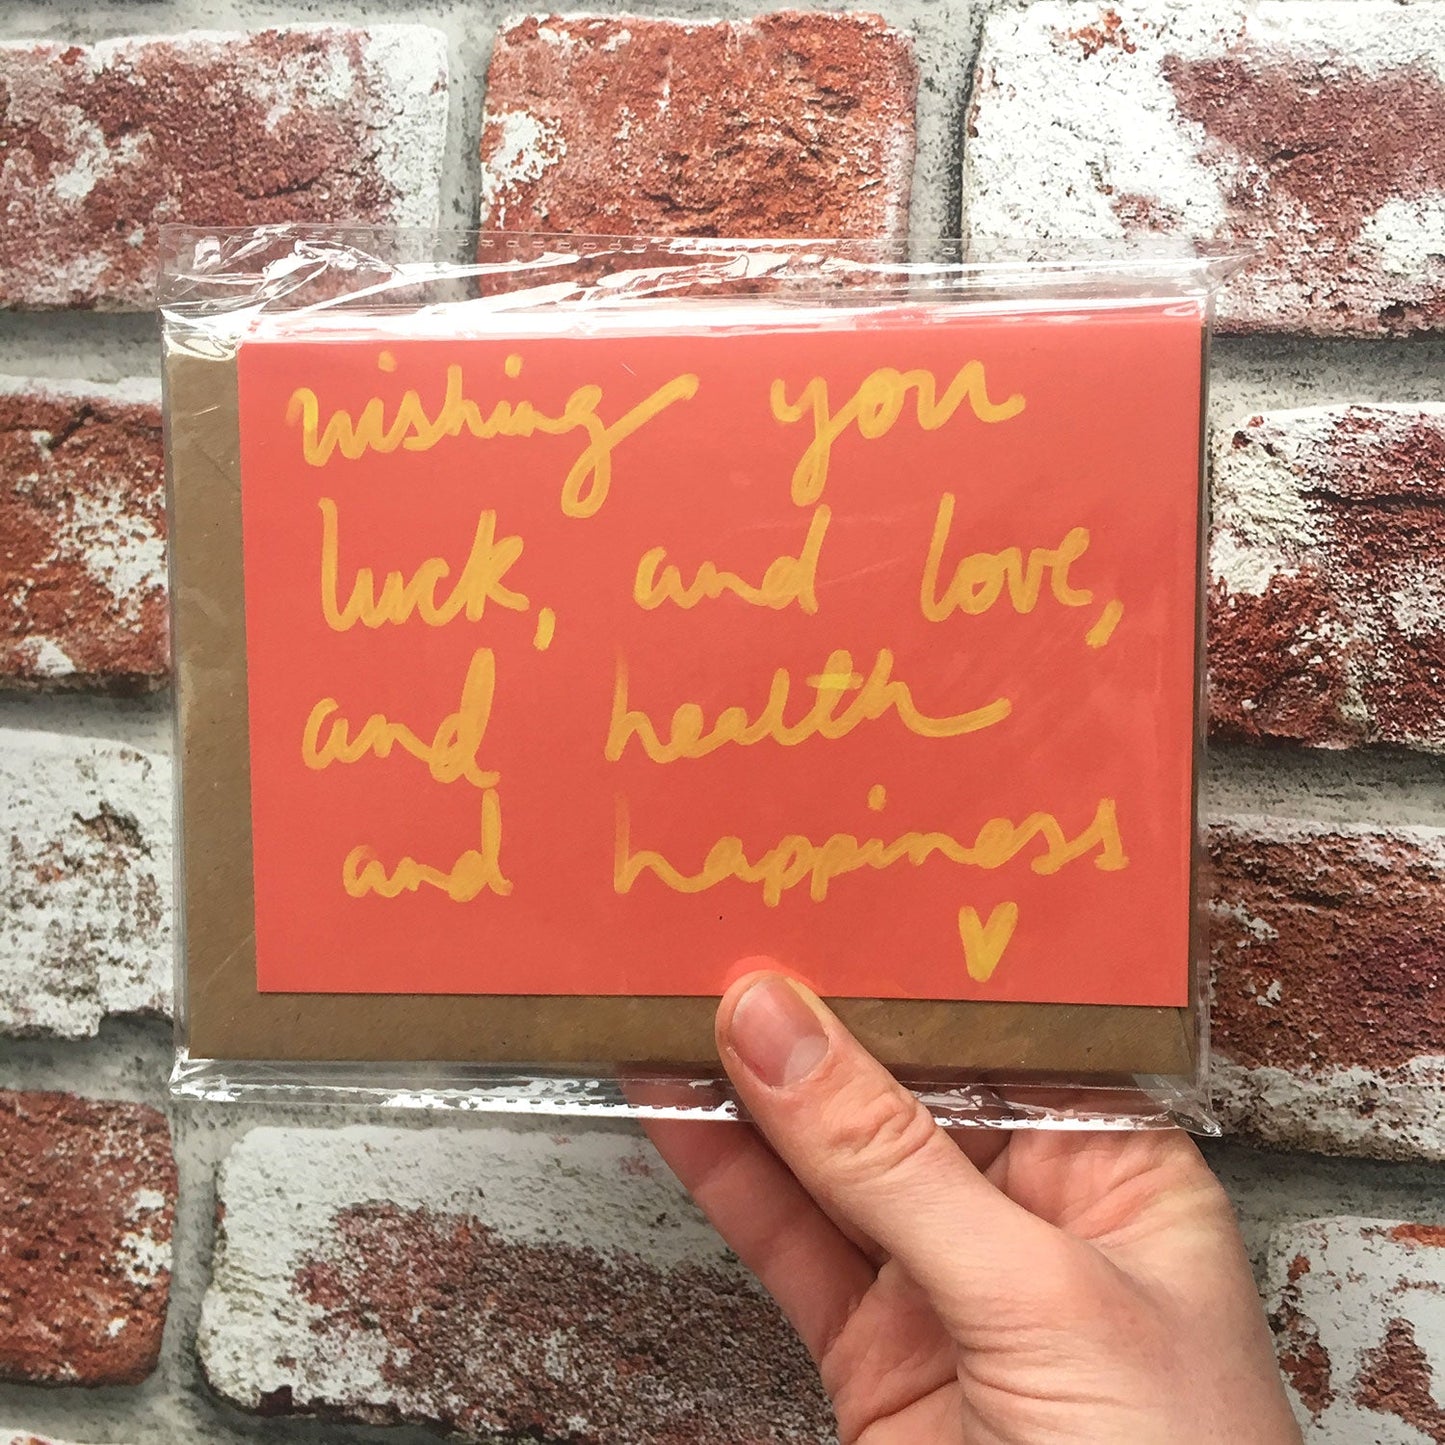 Love, Luck & Health card